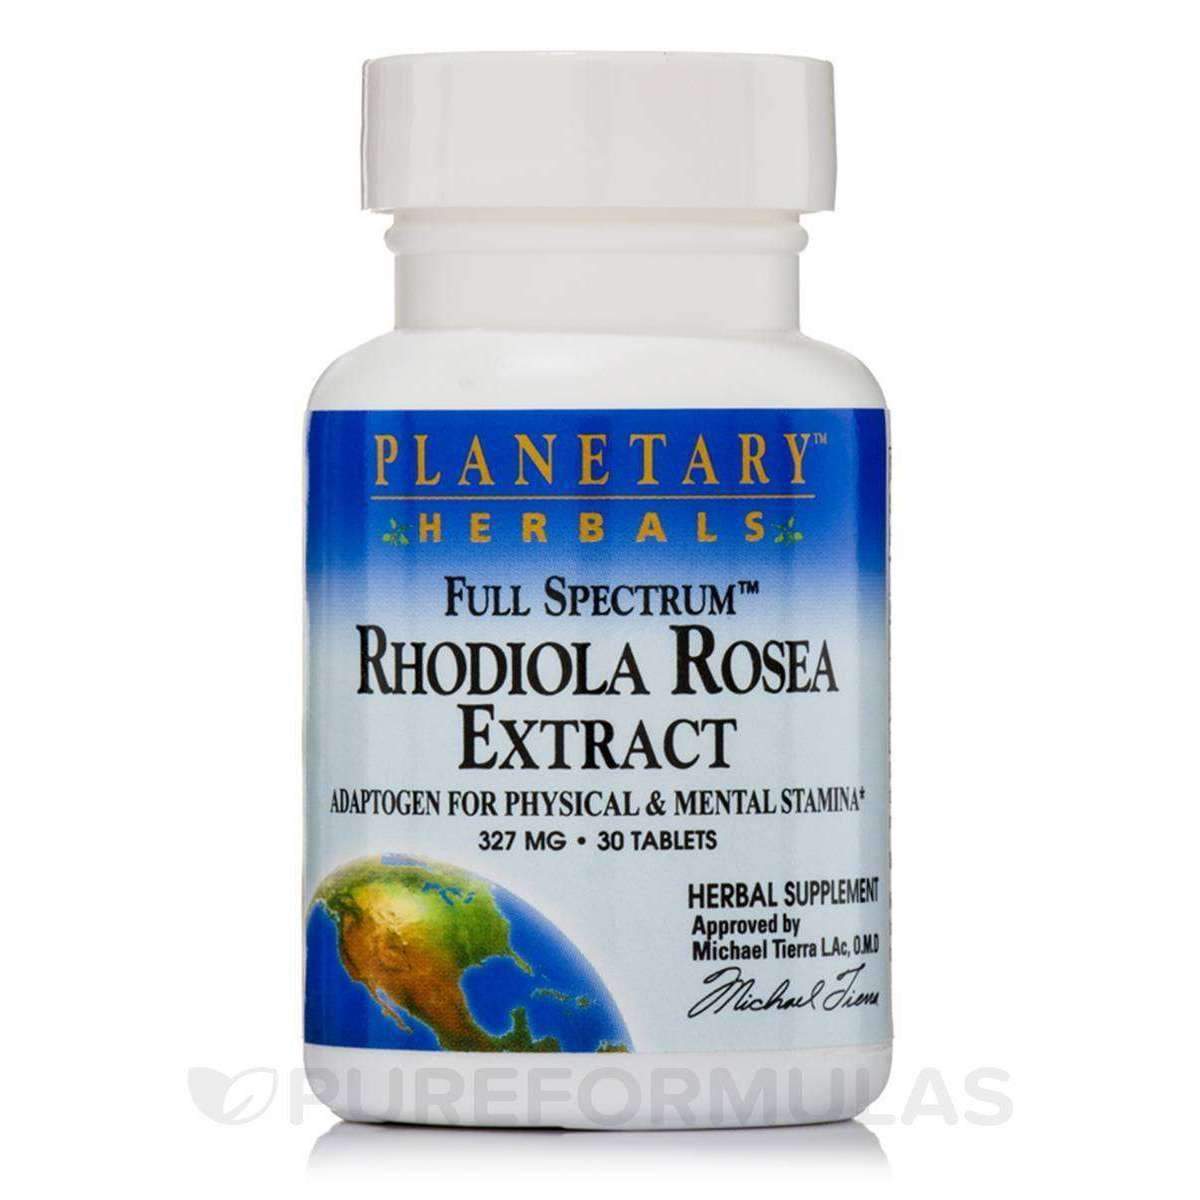 Rhodiola Rosea Extract 327mg 30 Tablets